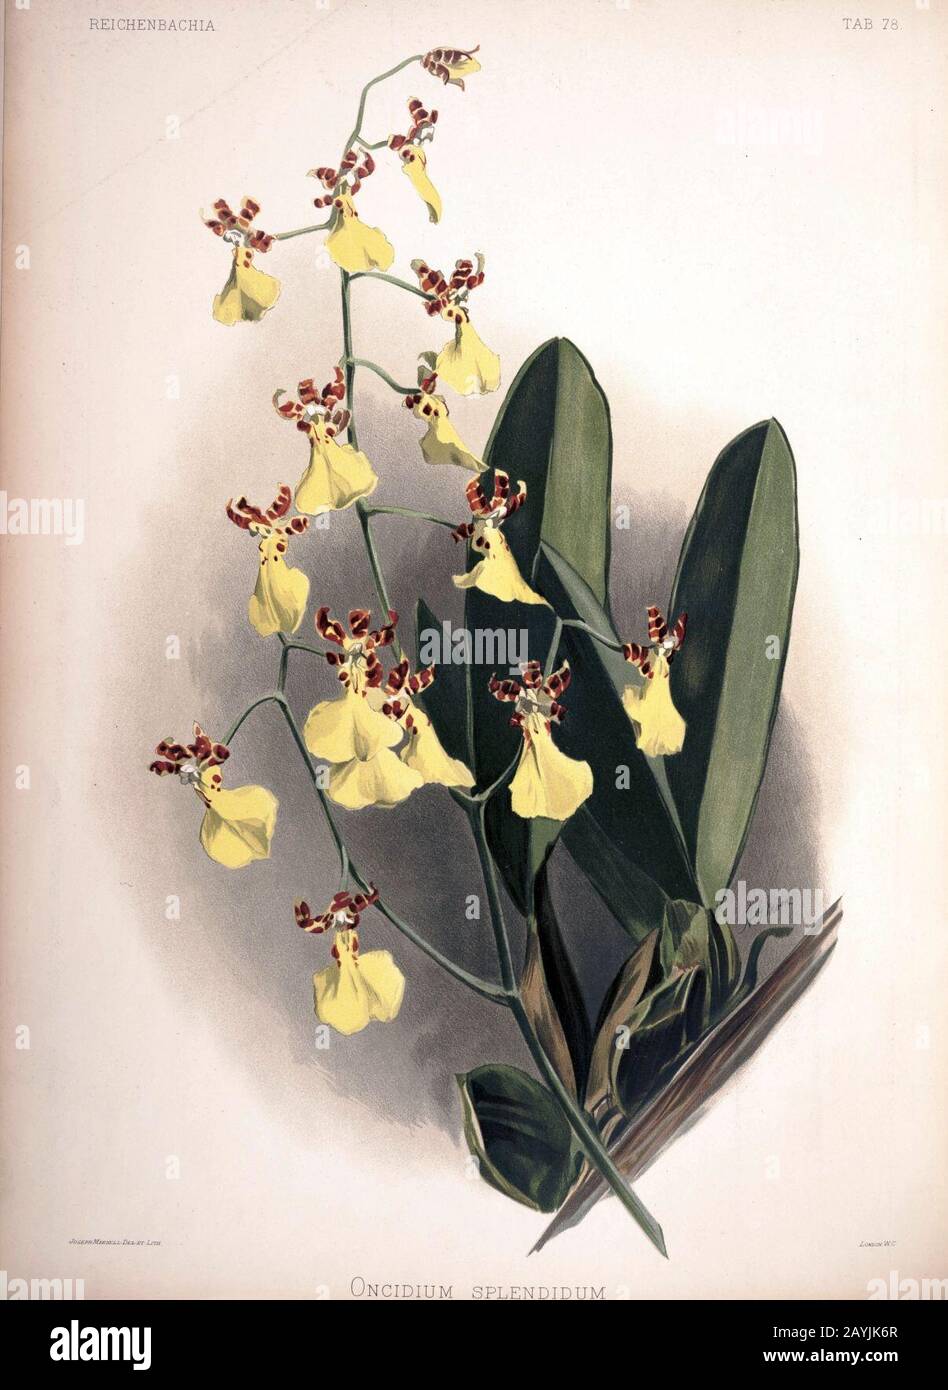 Frederick Sander - Reichenbachia II plate 78 (1890) - Oncidium splendidum. Stock Photo